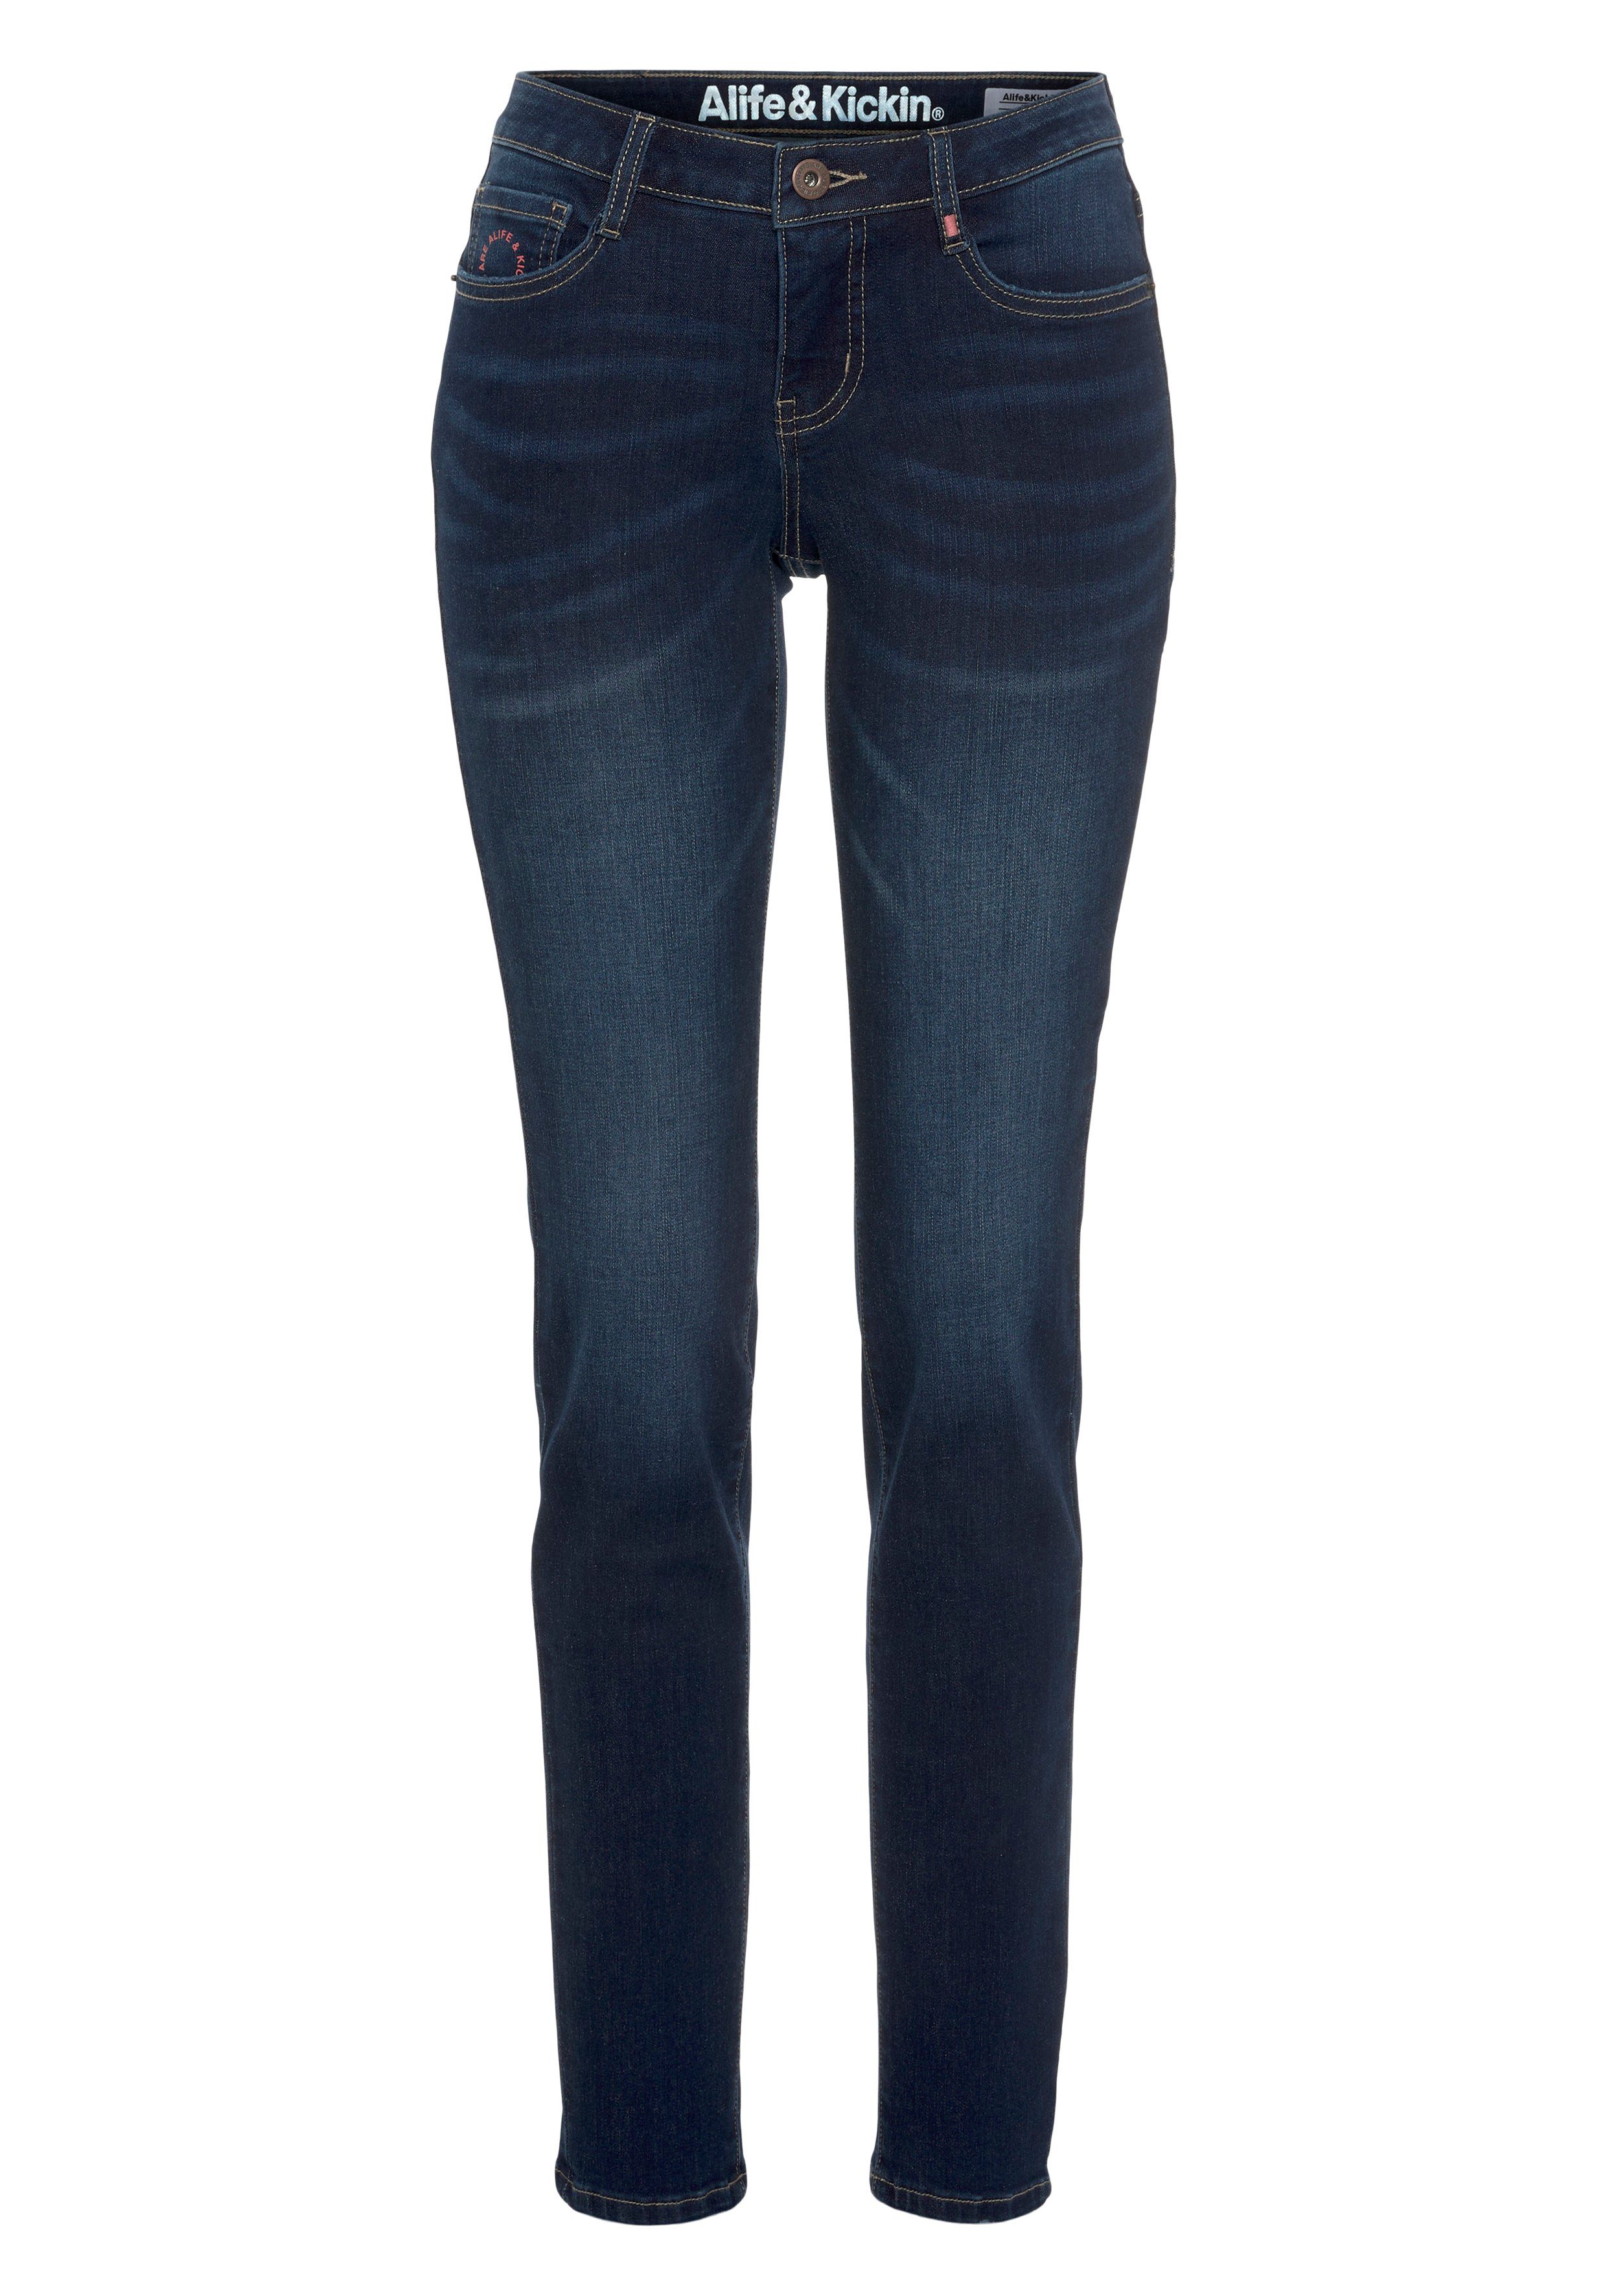 blue Low-rise-Jeans NEUE Kickin KOLLEKTION Alife used & NolaAK Dark